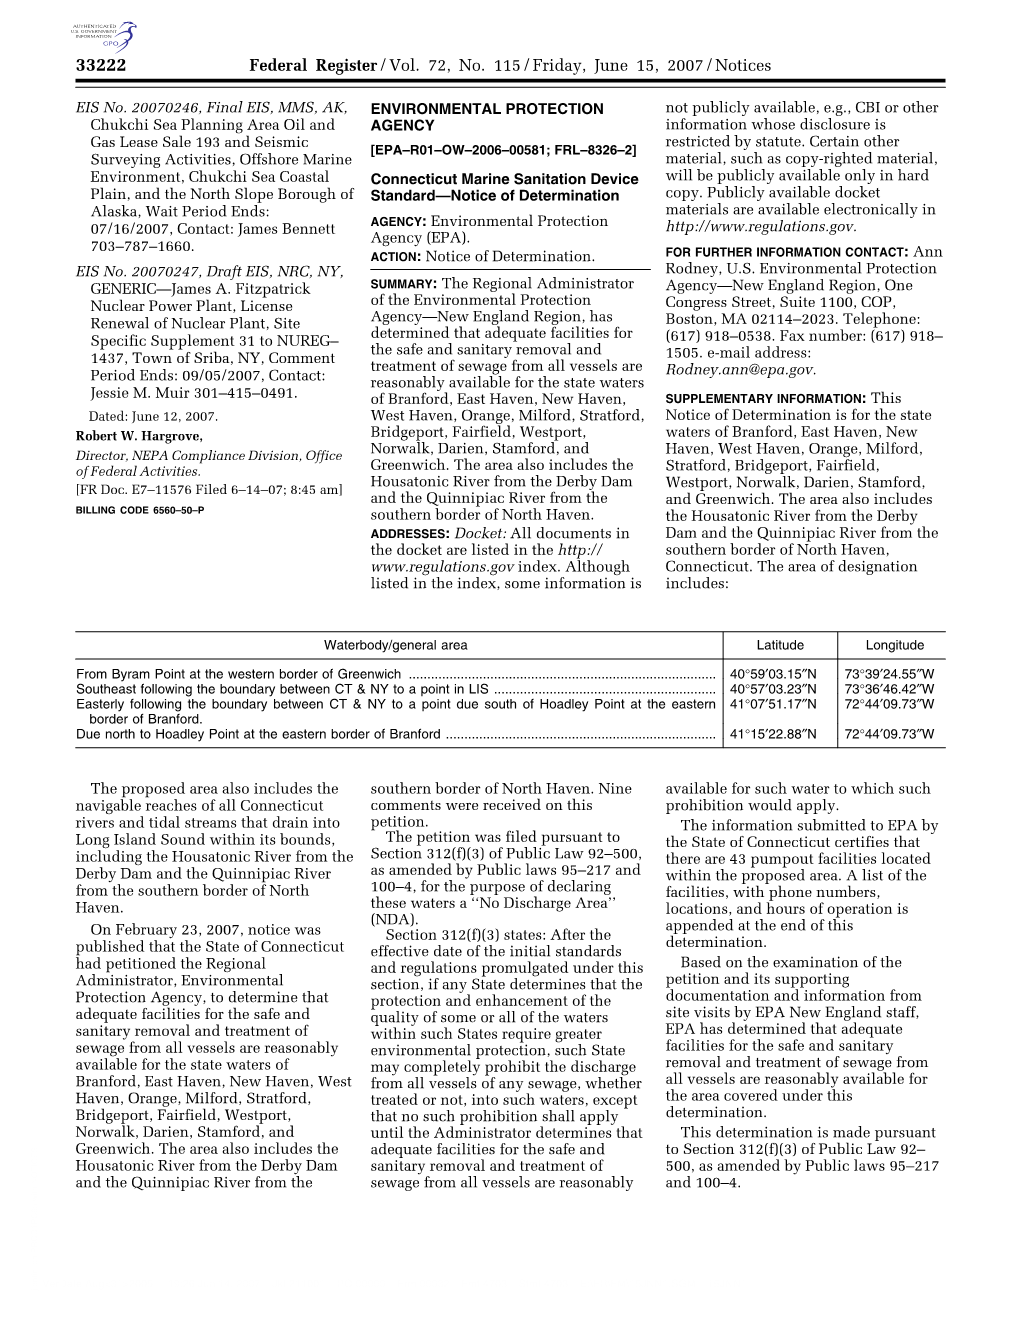 Federal Register/Vol. 72, No. 115/Friday, June 15, 2007/Notices